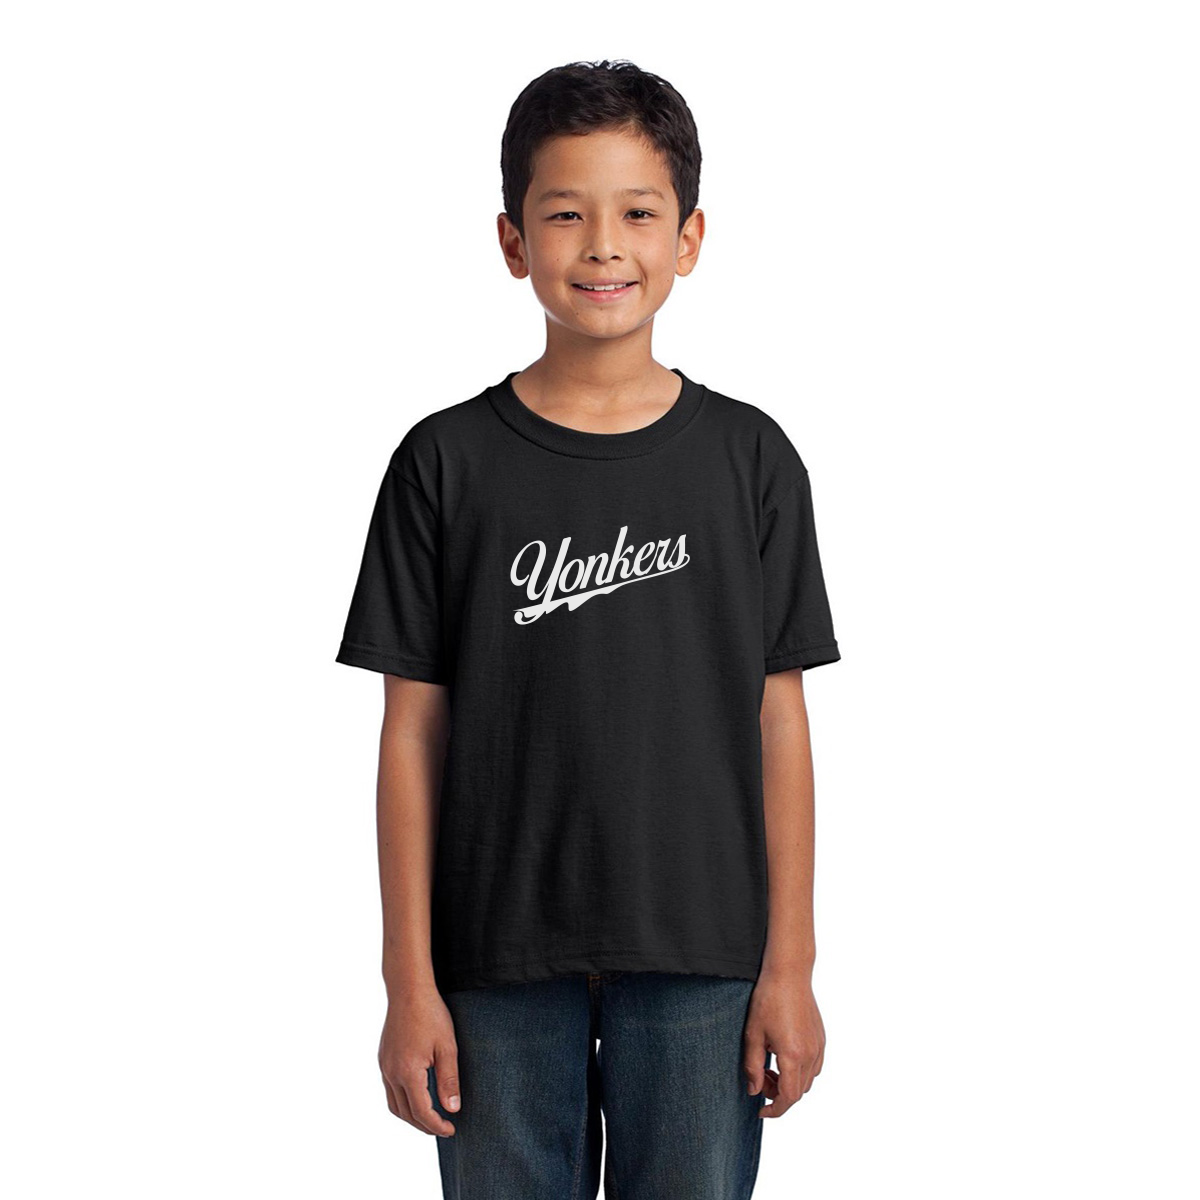 Yonkers Kids T-shirt | Black